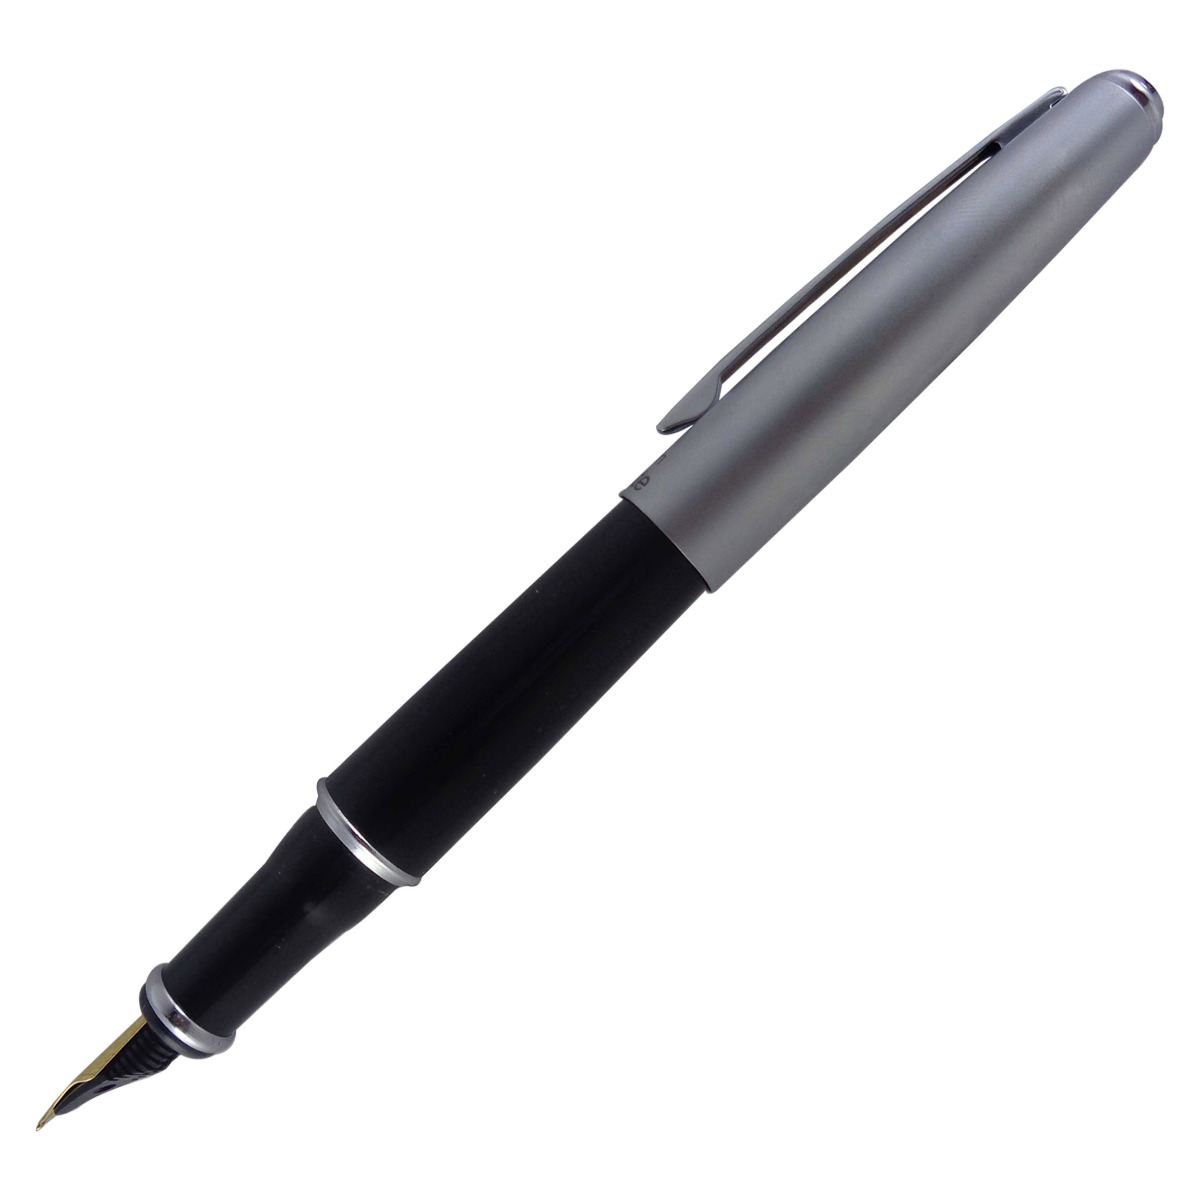 Camlin Elegante – Black Color Body With Silver Cap Thick Body Fountain Pen Model: 13508